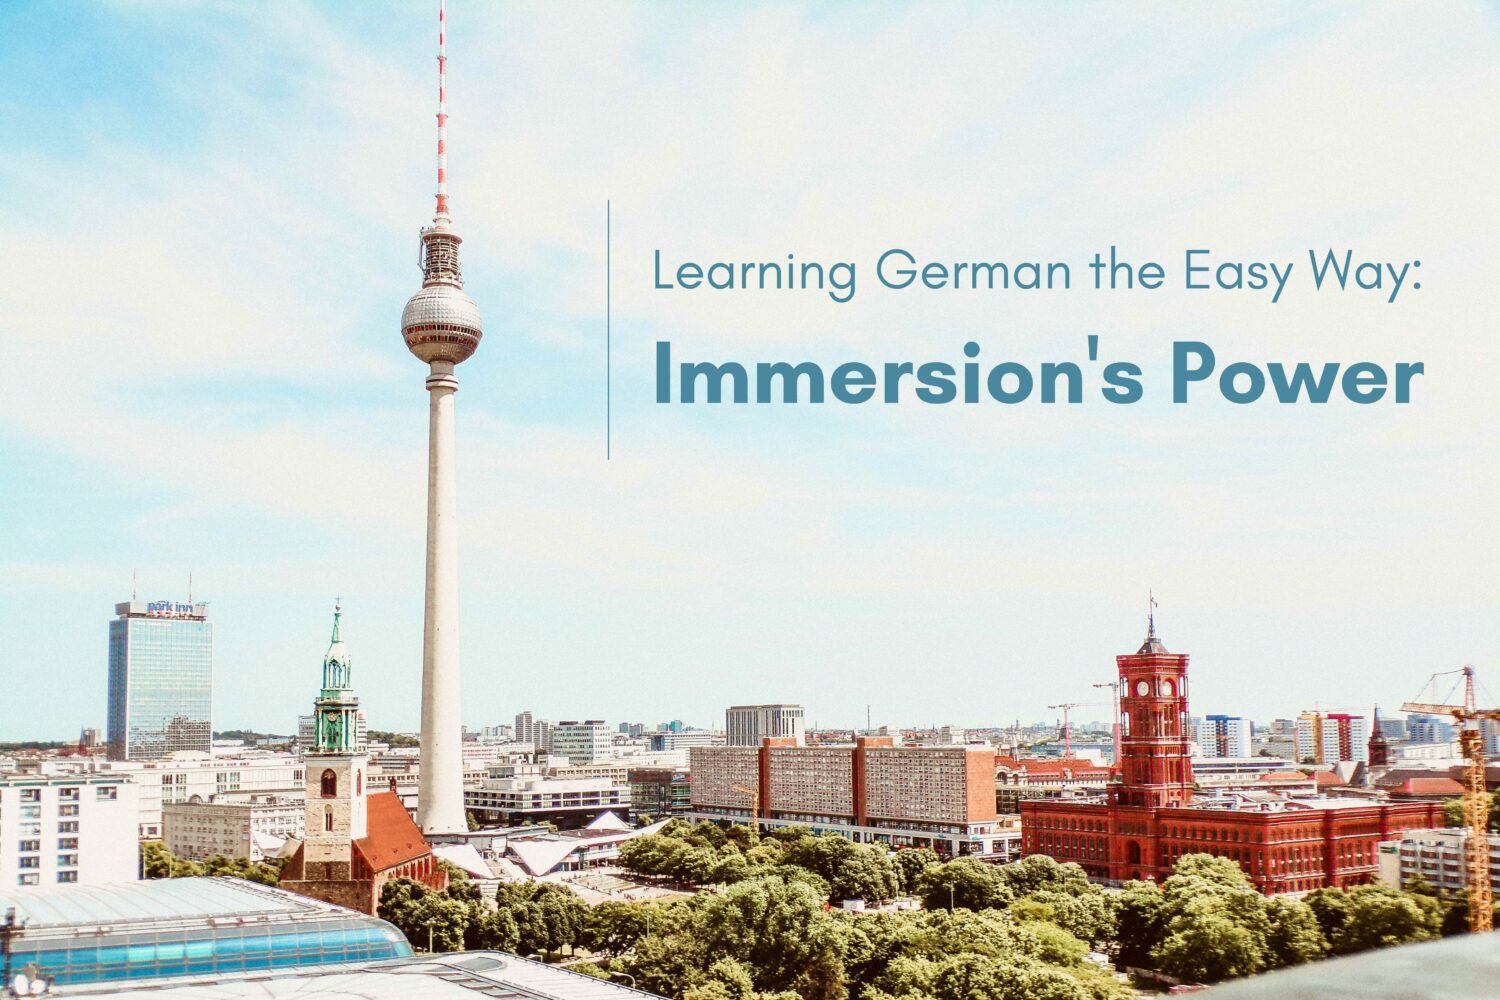 German language learning through Immersion